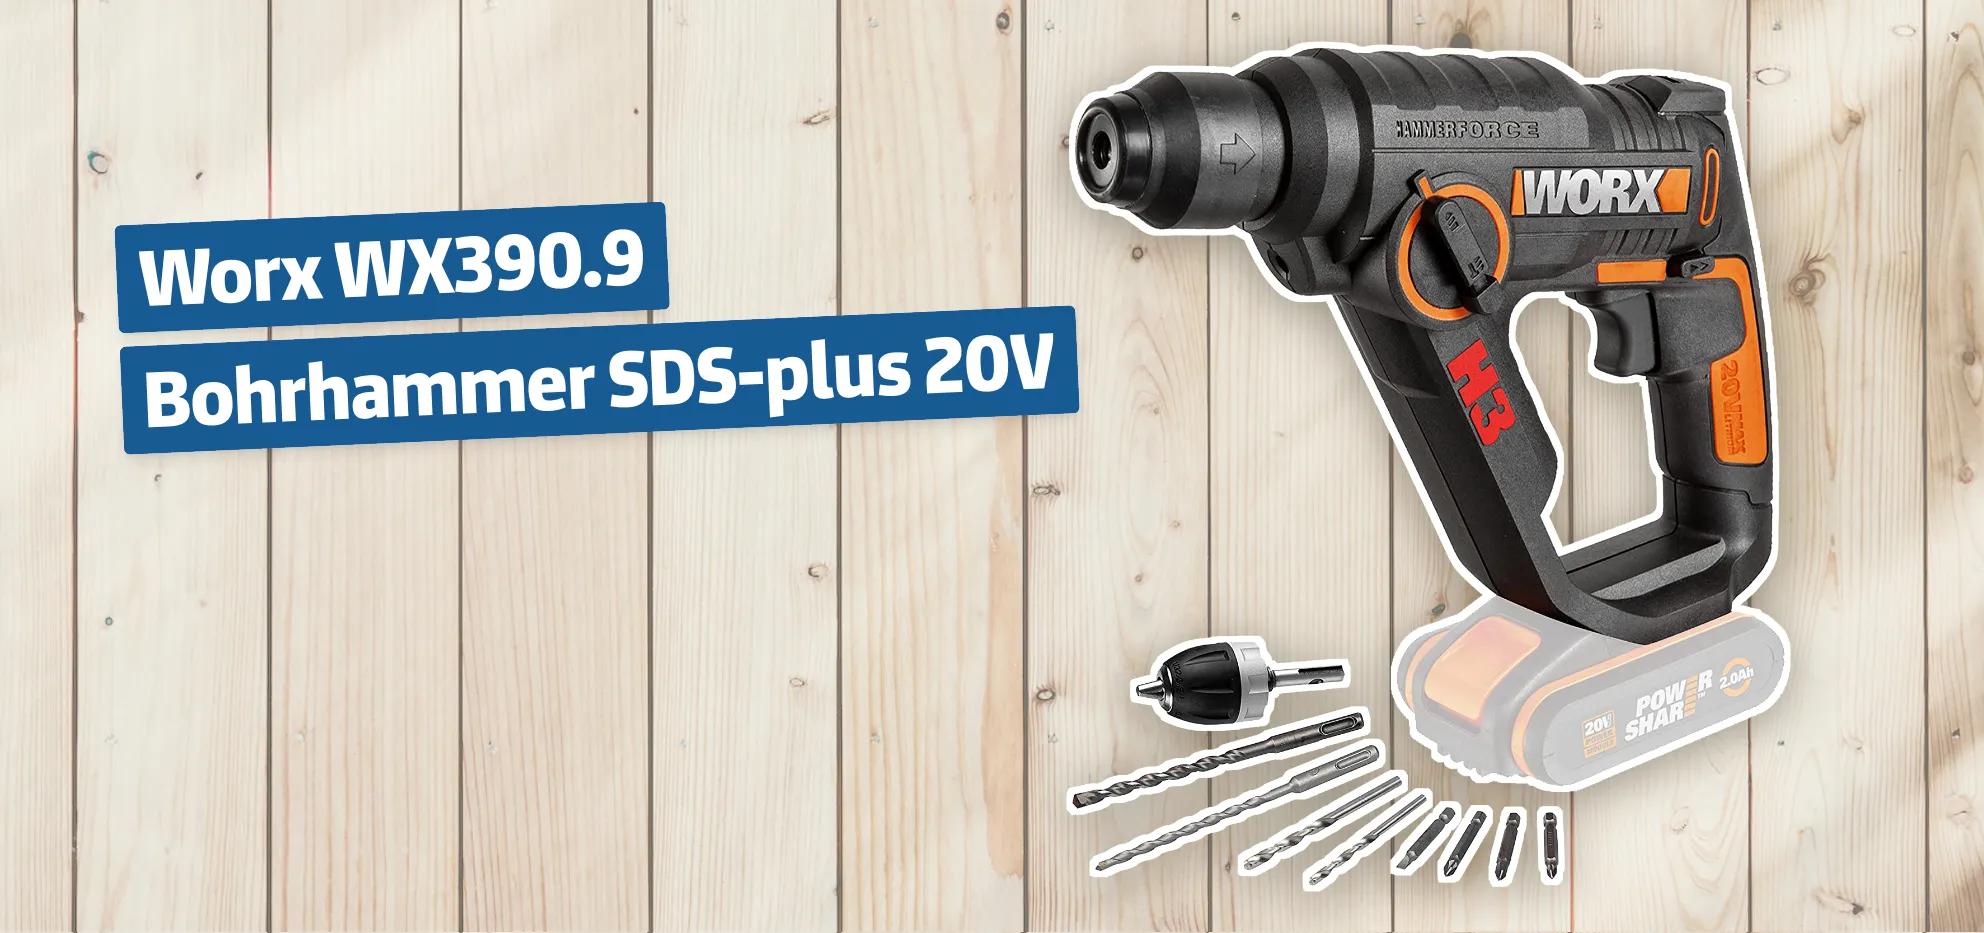 Worx WX390.9 Bohrhammer SDS-plus 20V